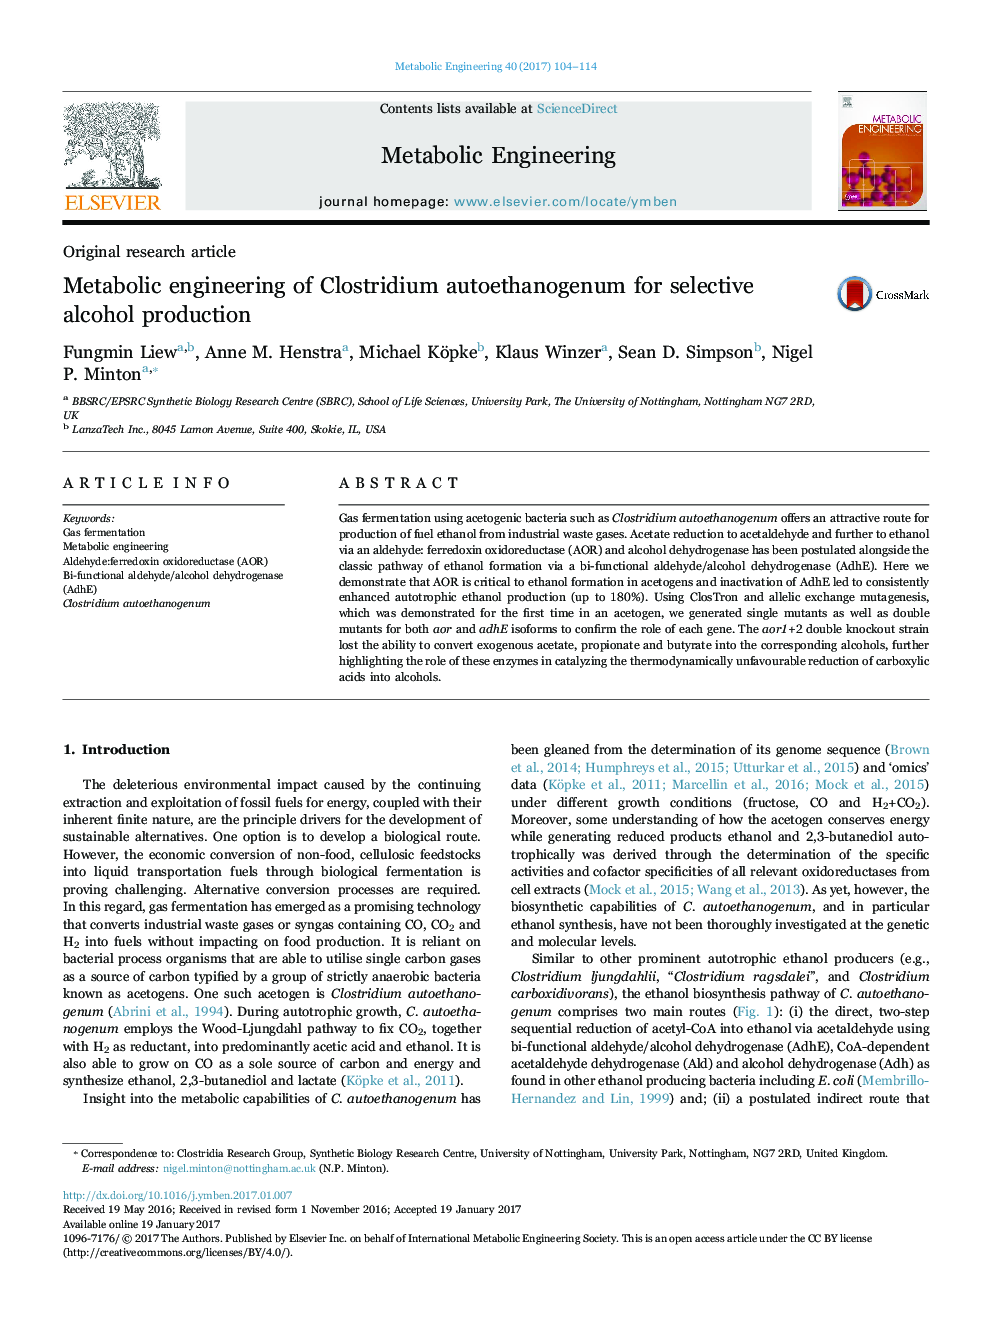 Original research articleMetabolic engineering of Clostridium autoethanogenum for selective alcohol production